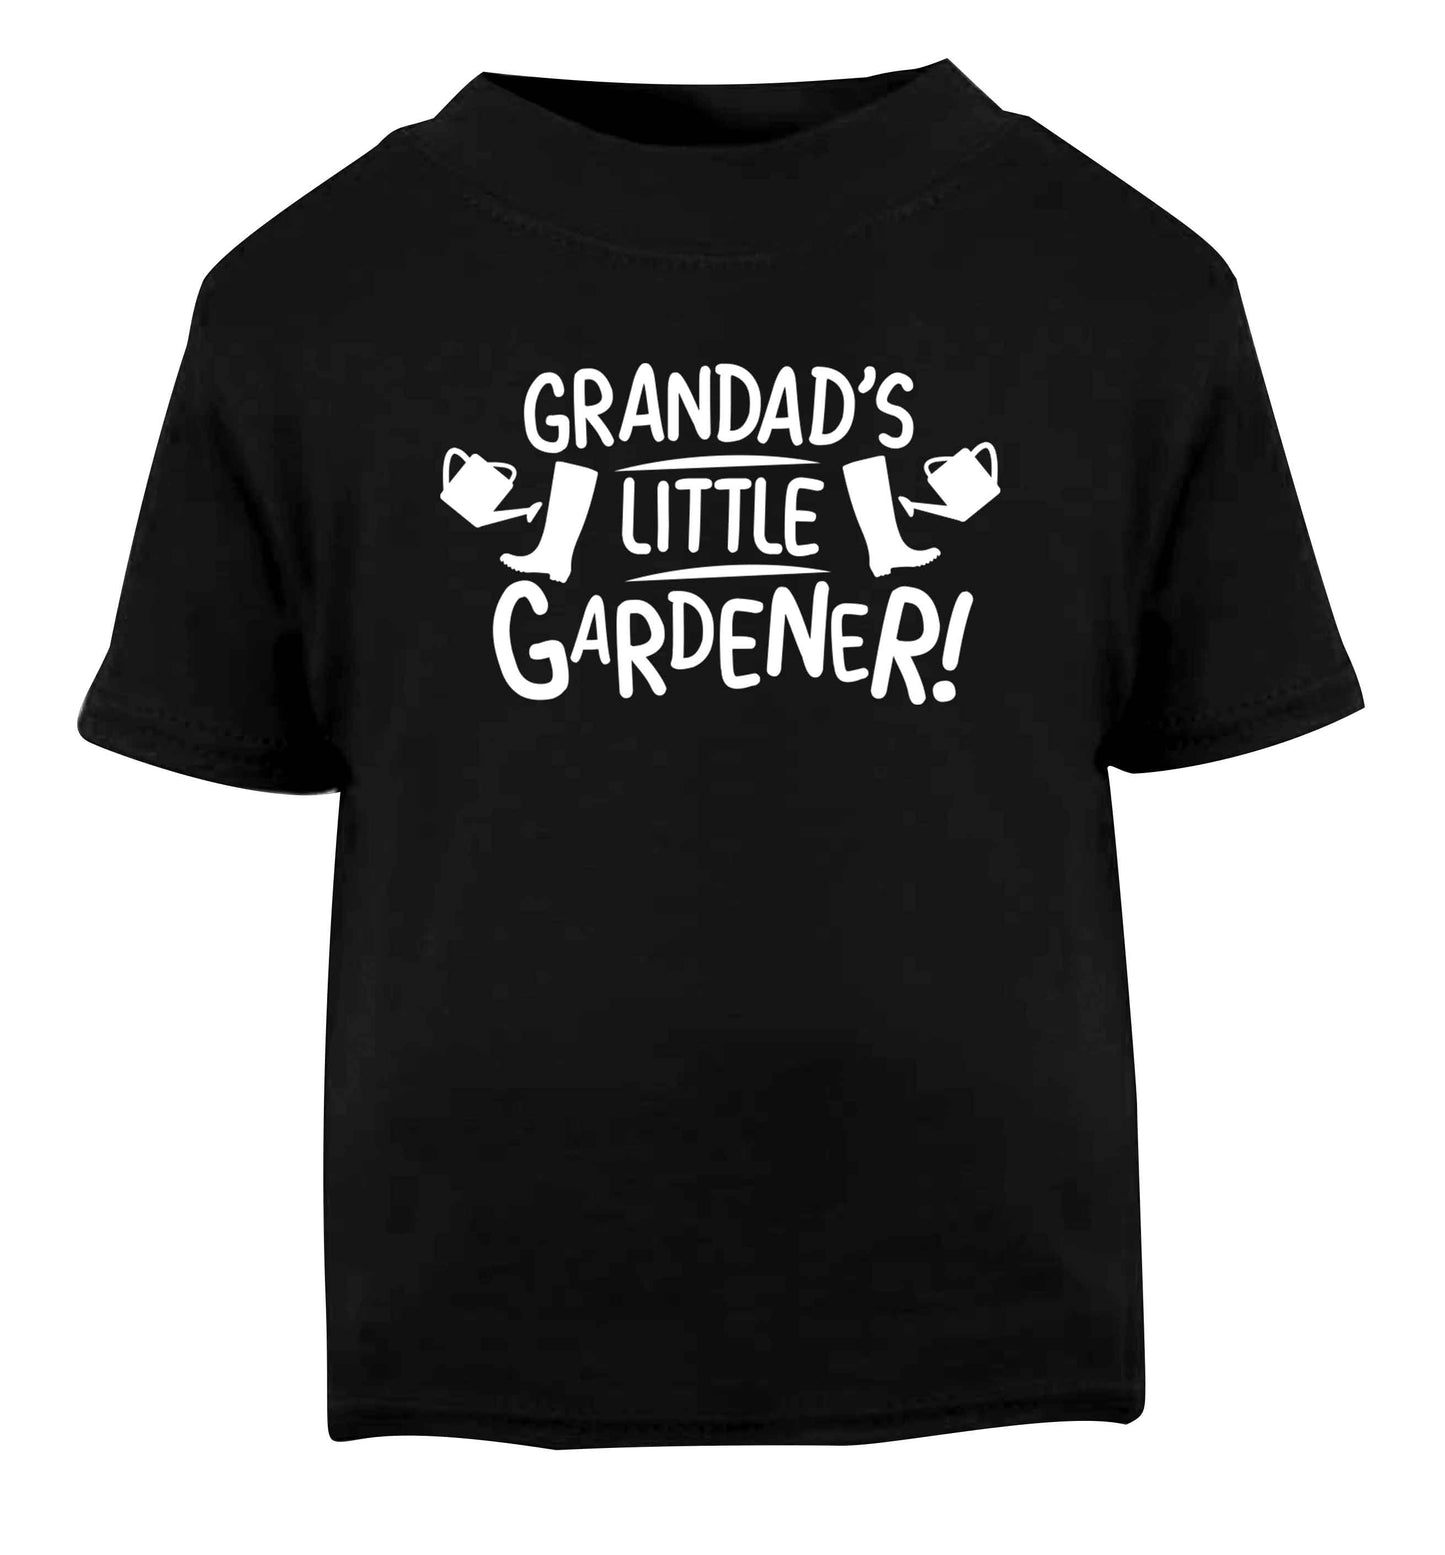 Grandad's little gardener Black Baby Toddler Tshirt 2 years